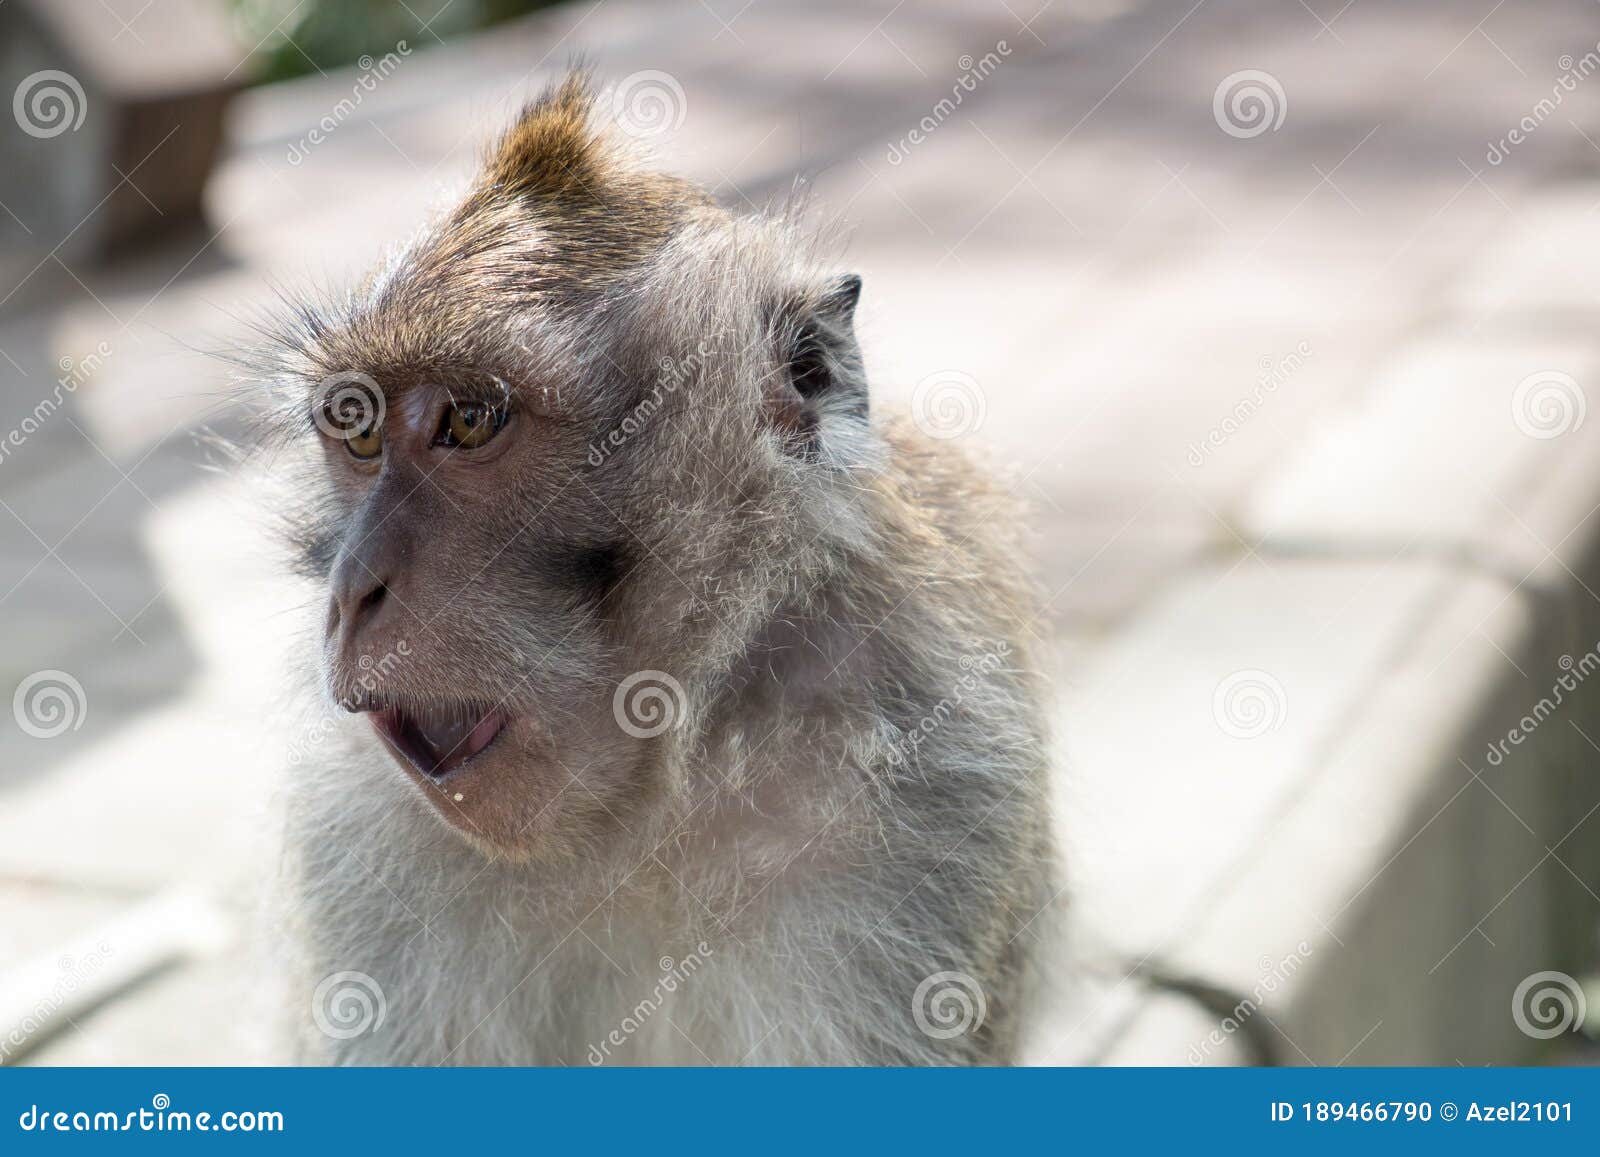 witty monkey at the street of buyan lake